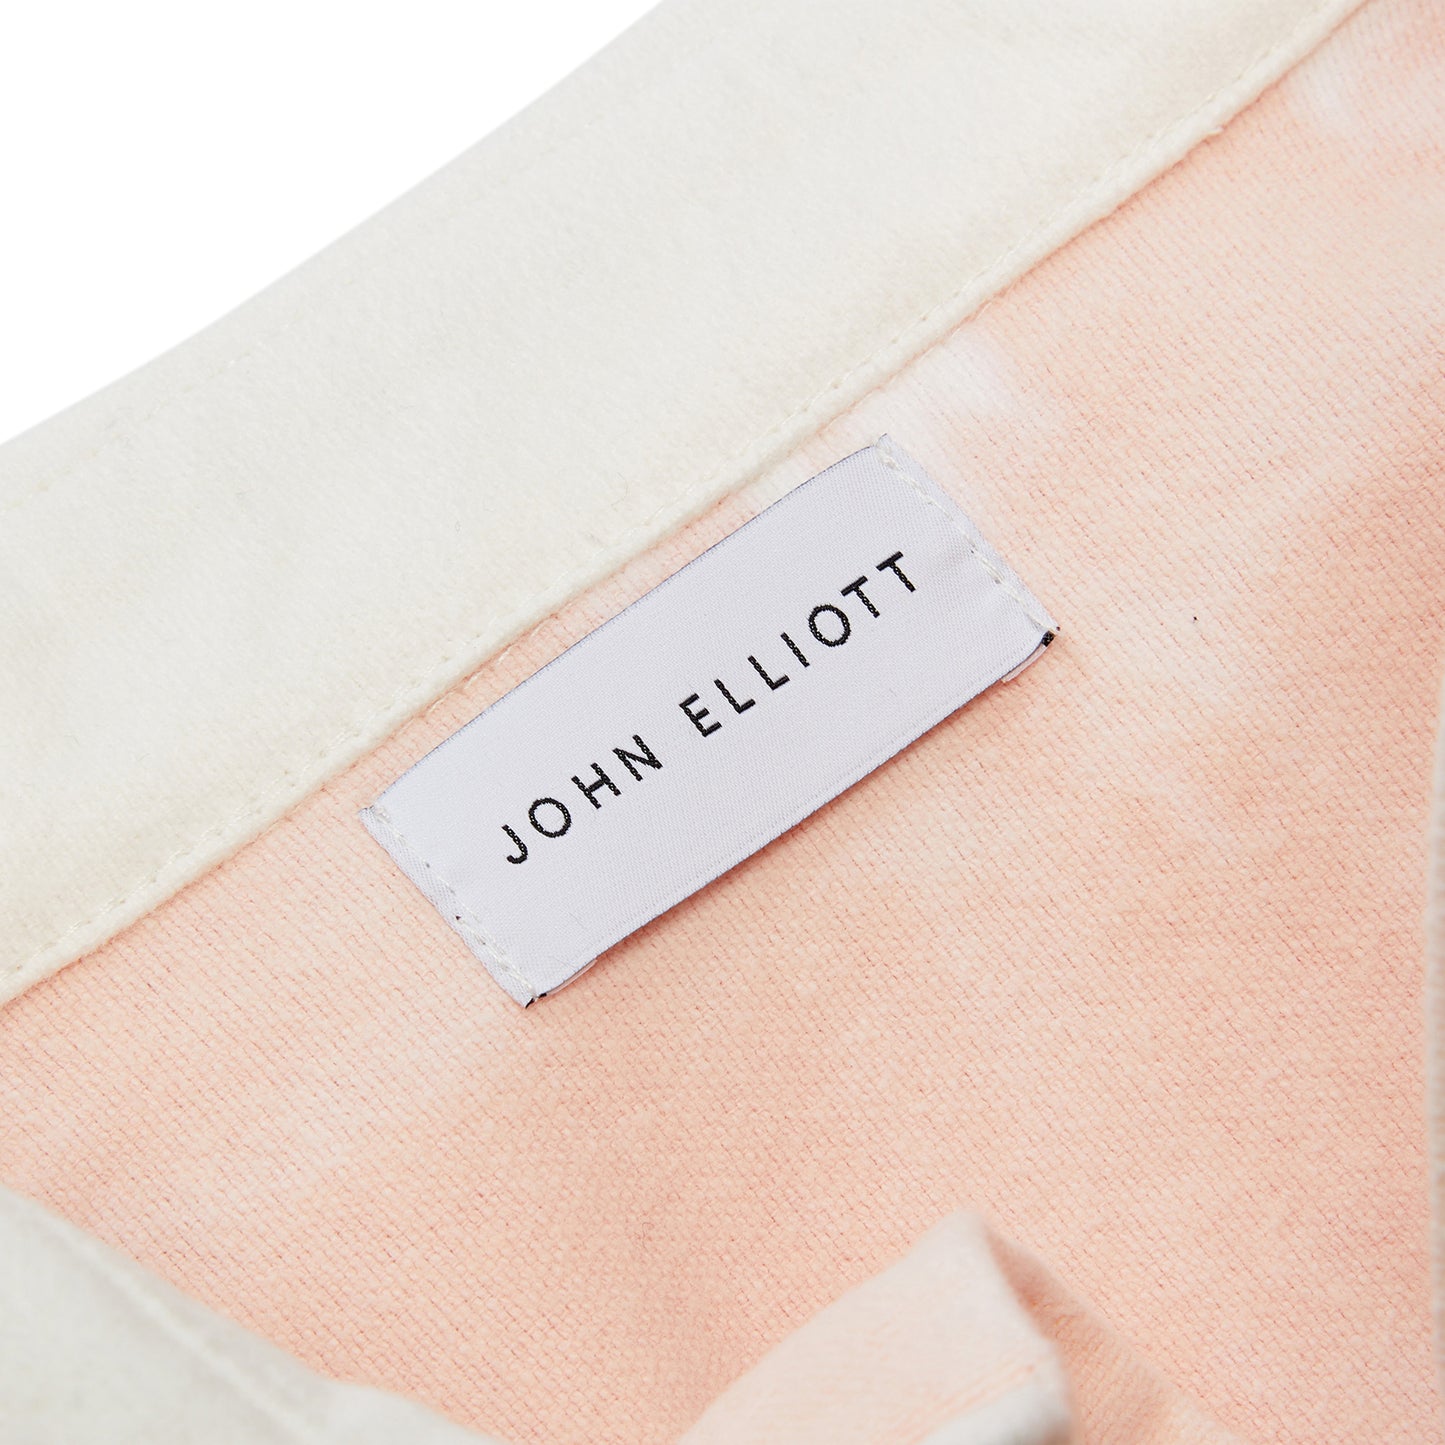 John Elliot Rugby Hemi Oversized Shirt (Pink/Yellow)